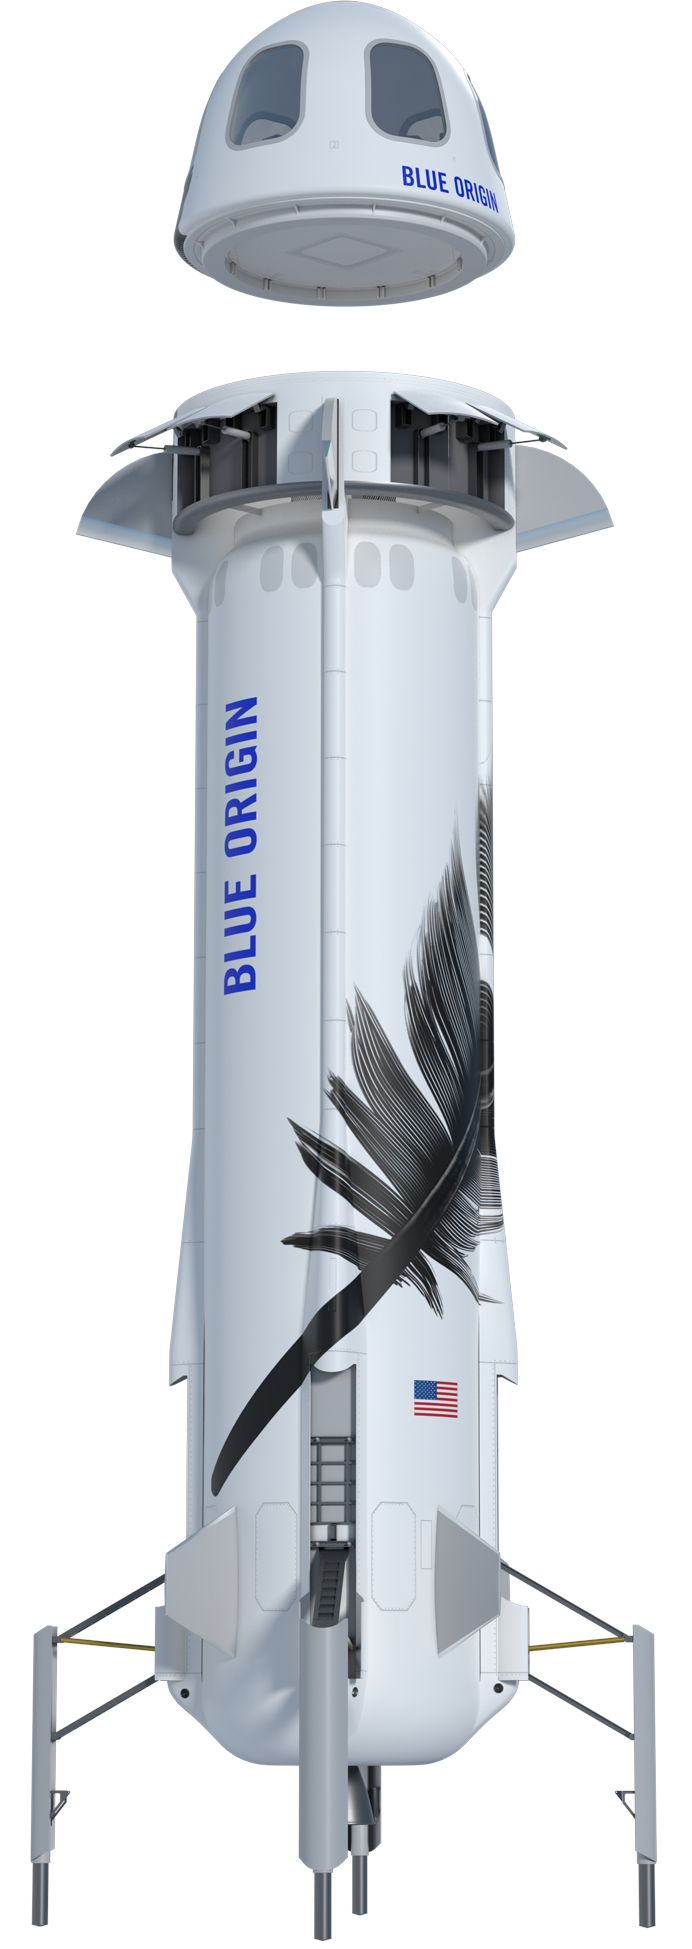 New Shepardのイメージ。飛行時間は約11分間という（出典：Blue Origin）